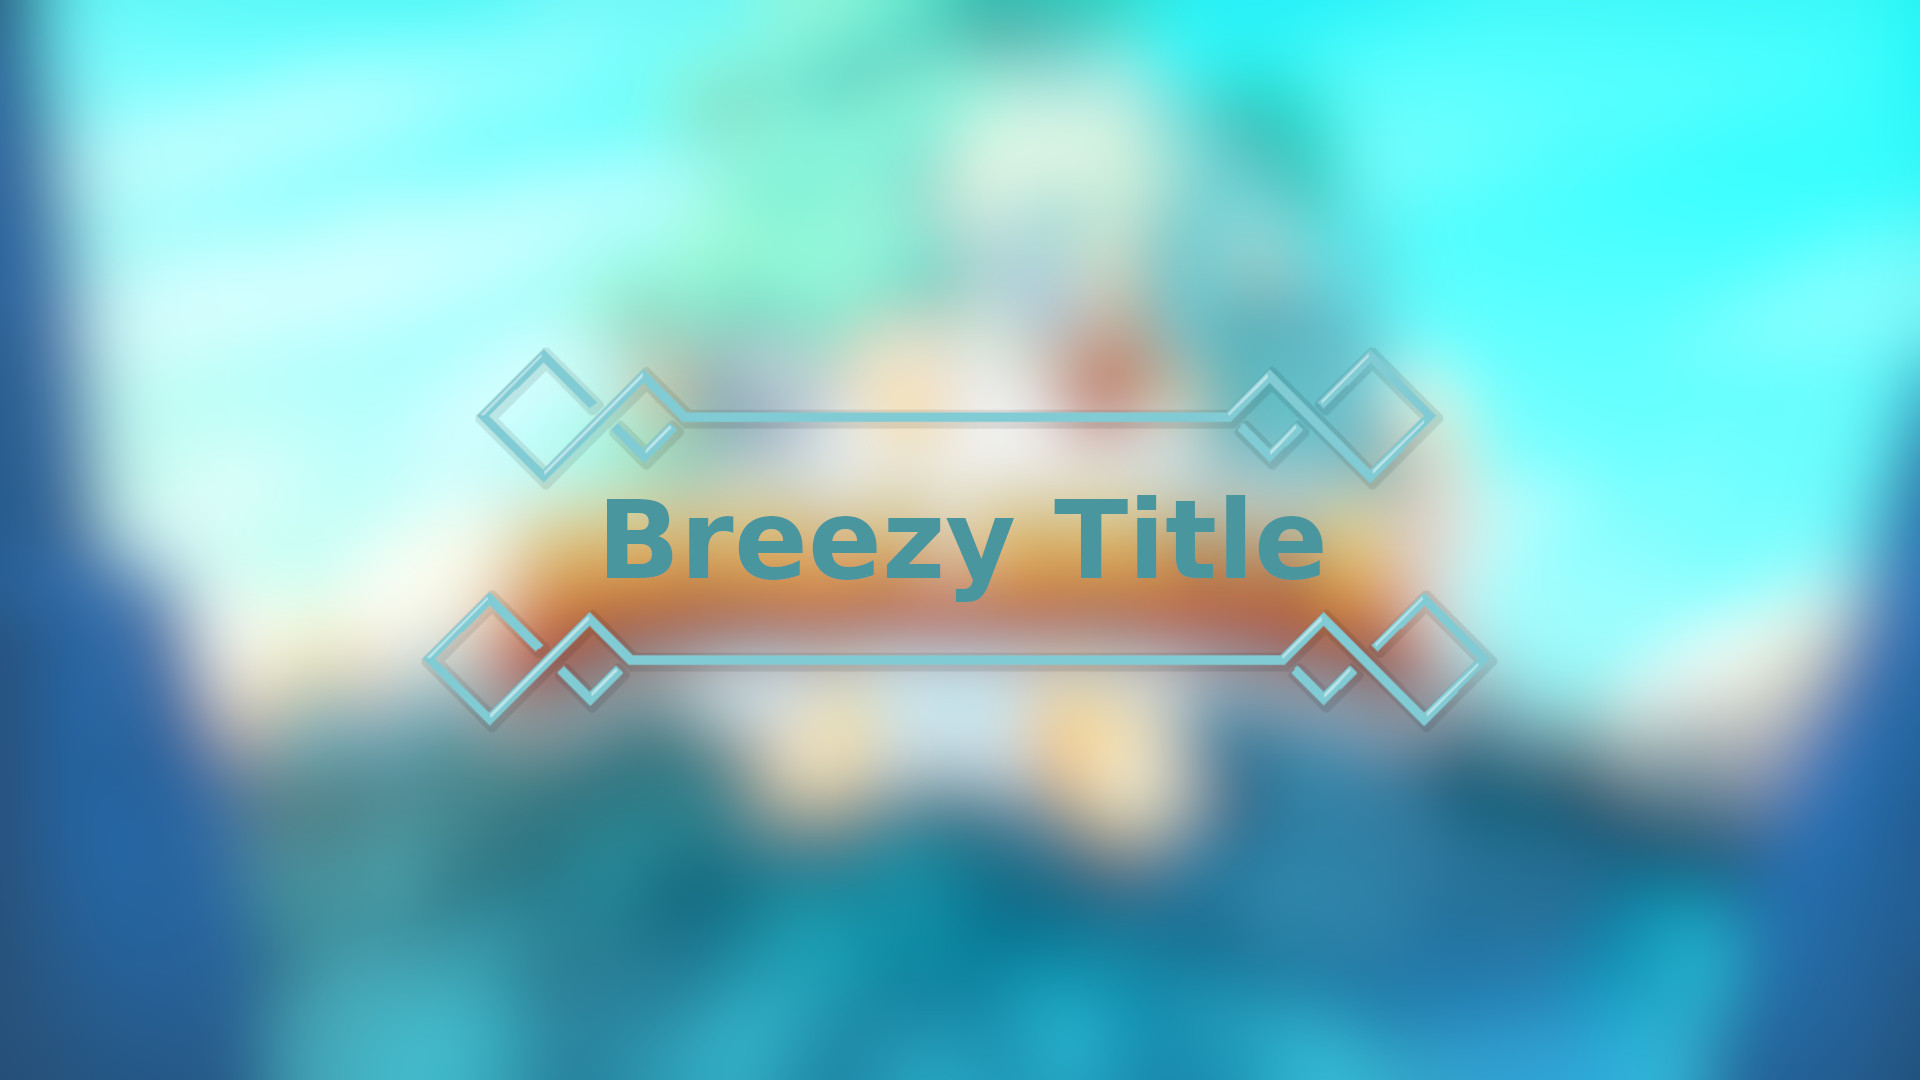 [$ 2.26] Brawlhalla - Breezy Title DLC CD Key